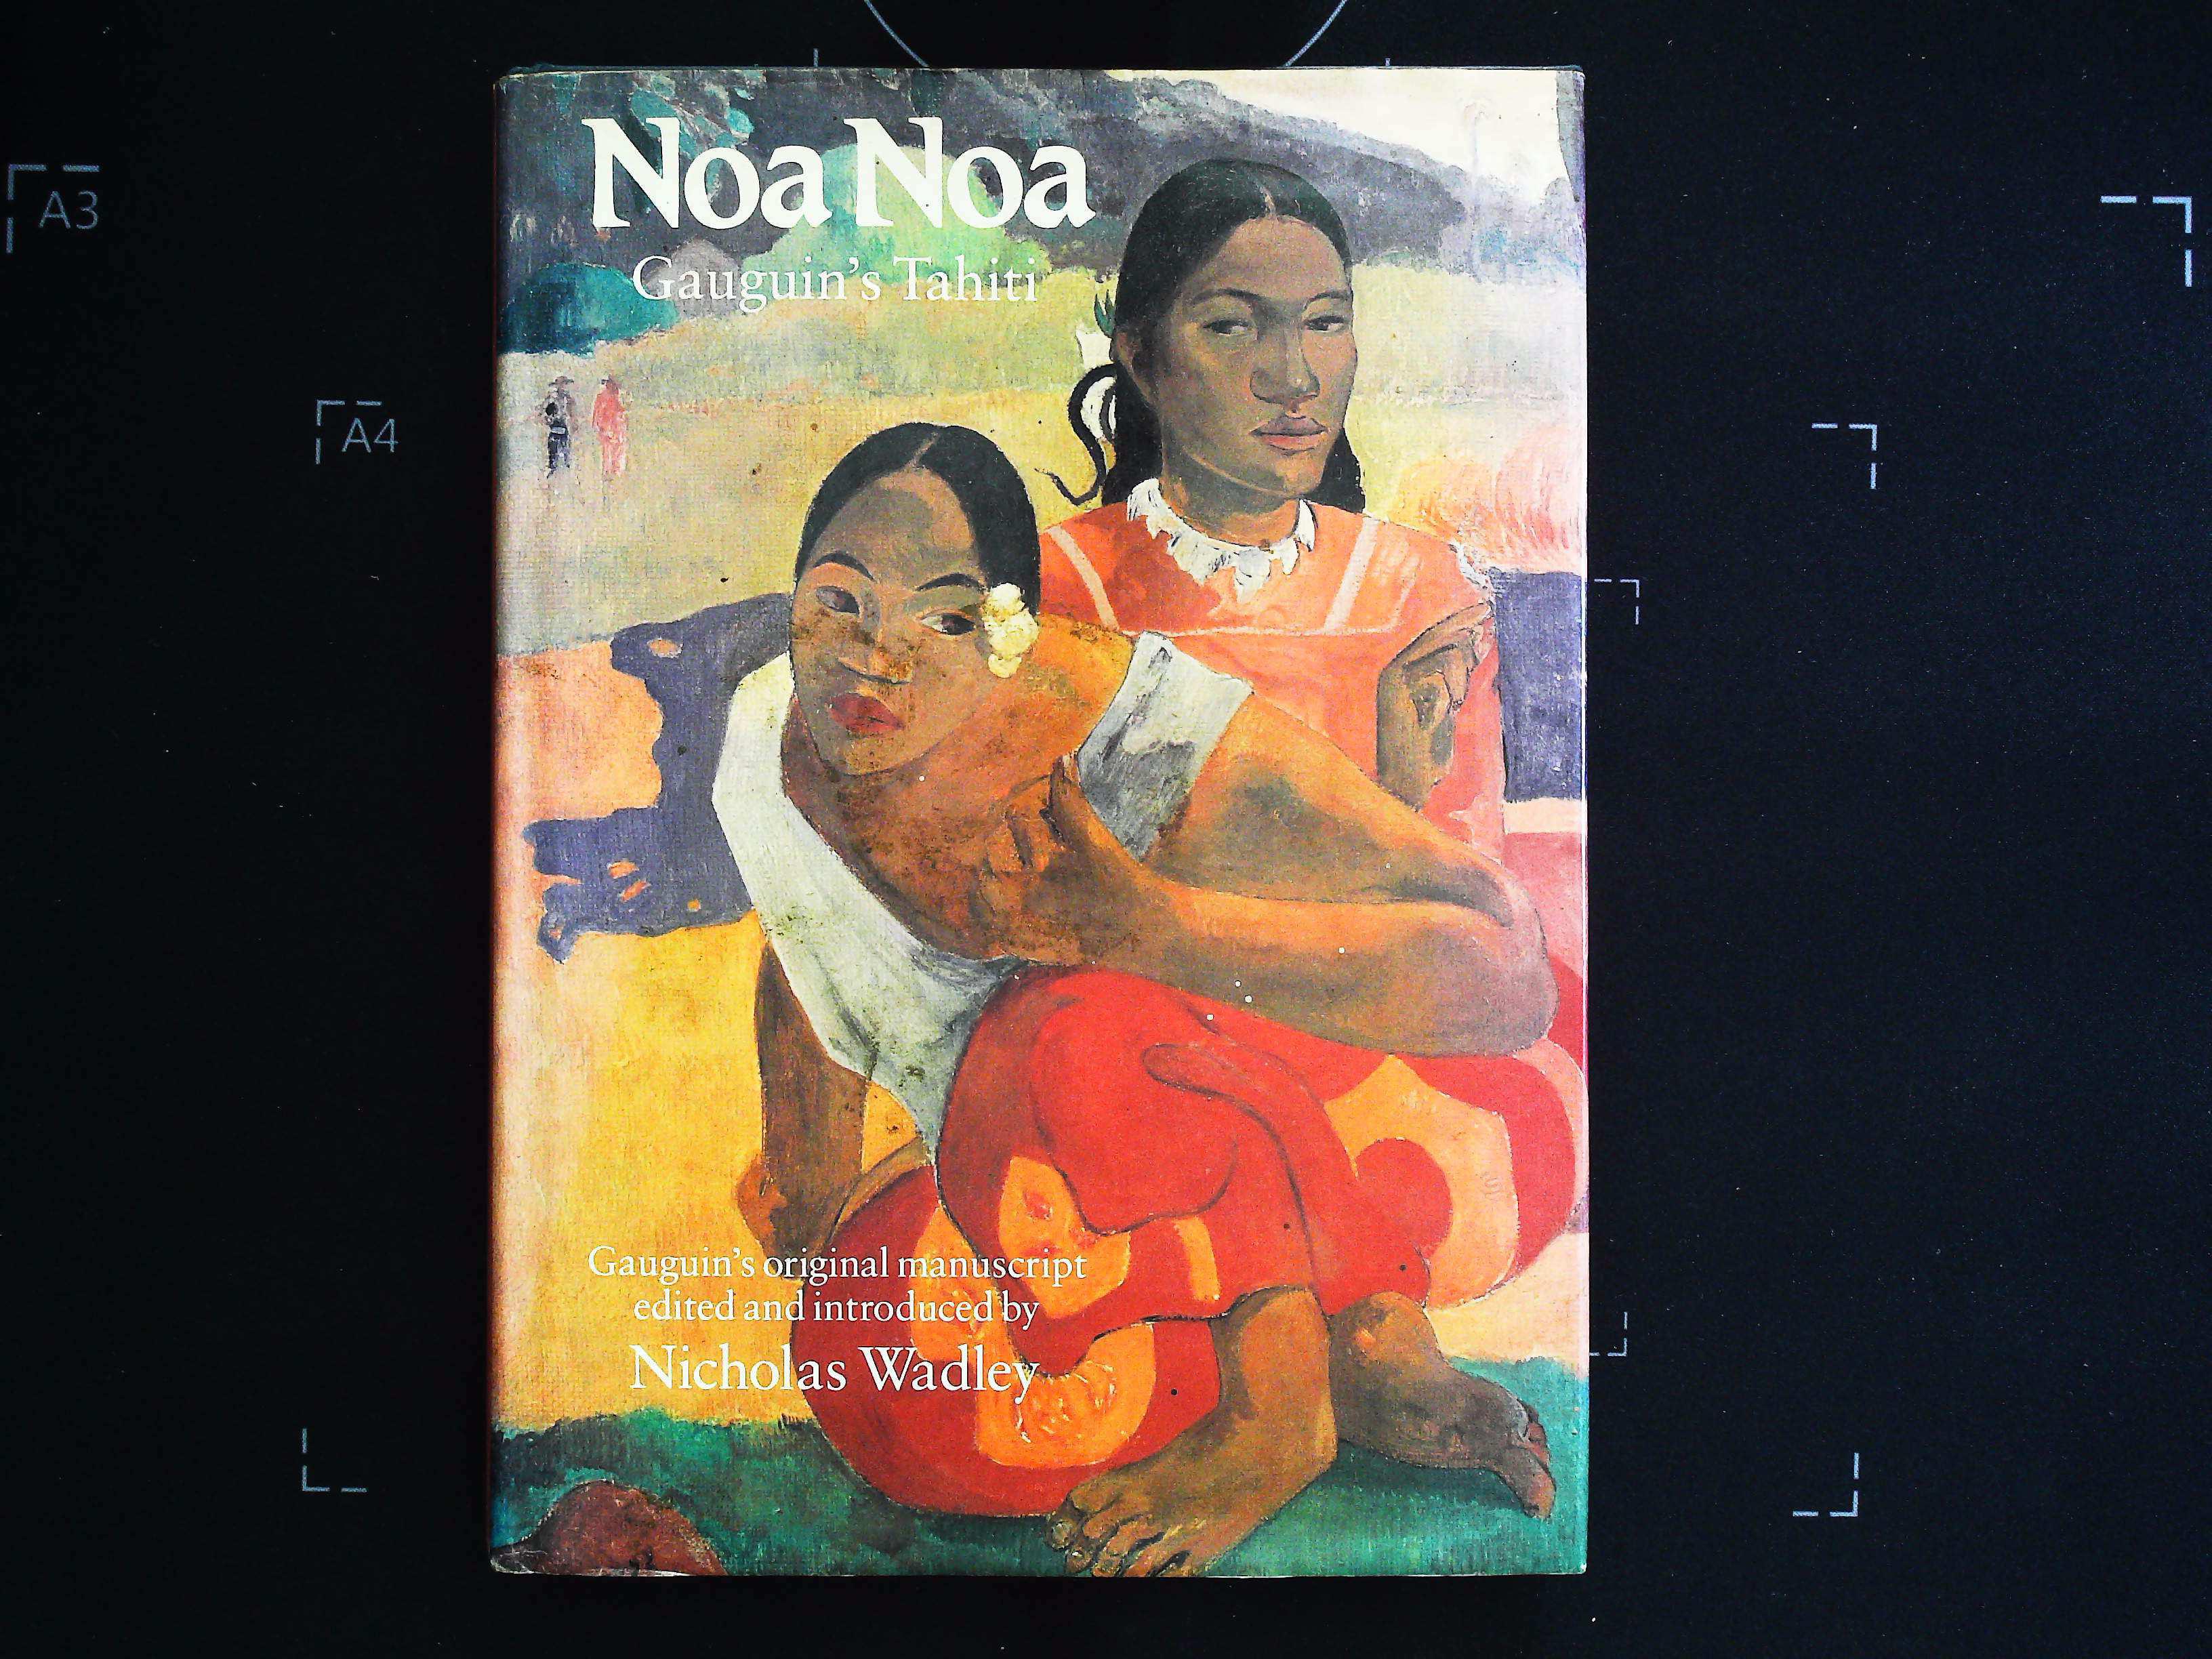 Noa Gauguin Tahiti edited by Nicholas Wadley hardback book 160 pages Published 1985 Phaidon Press